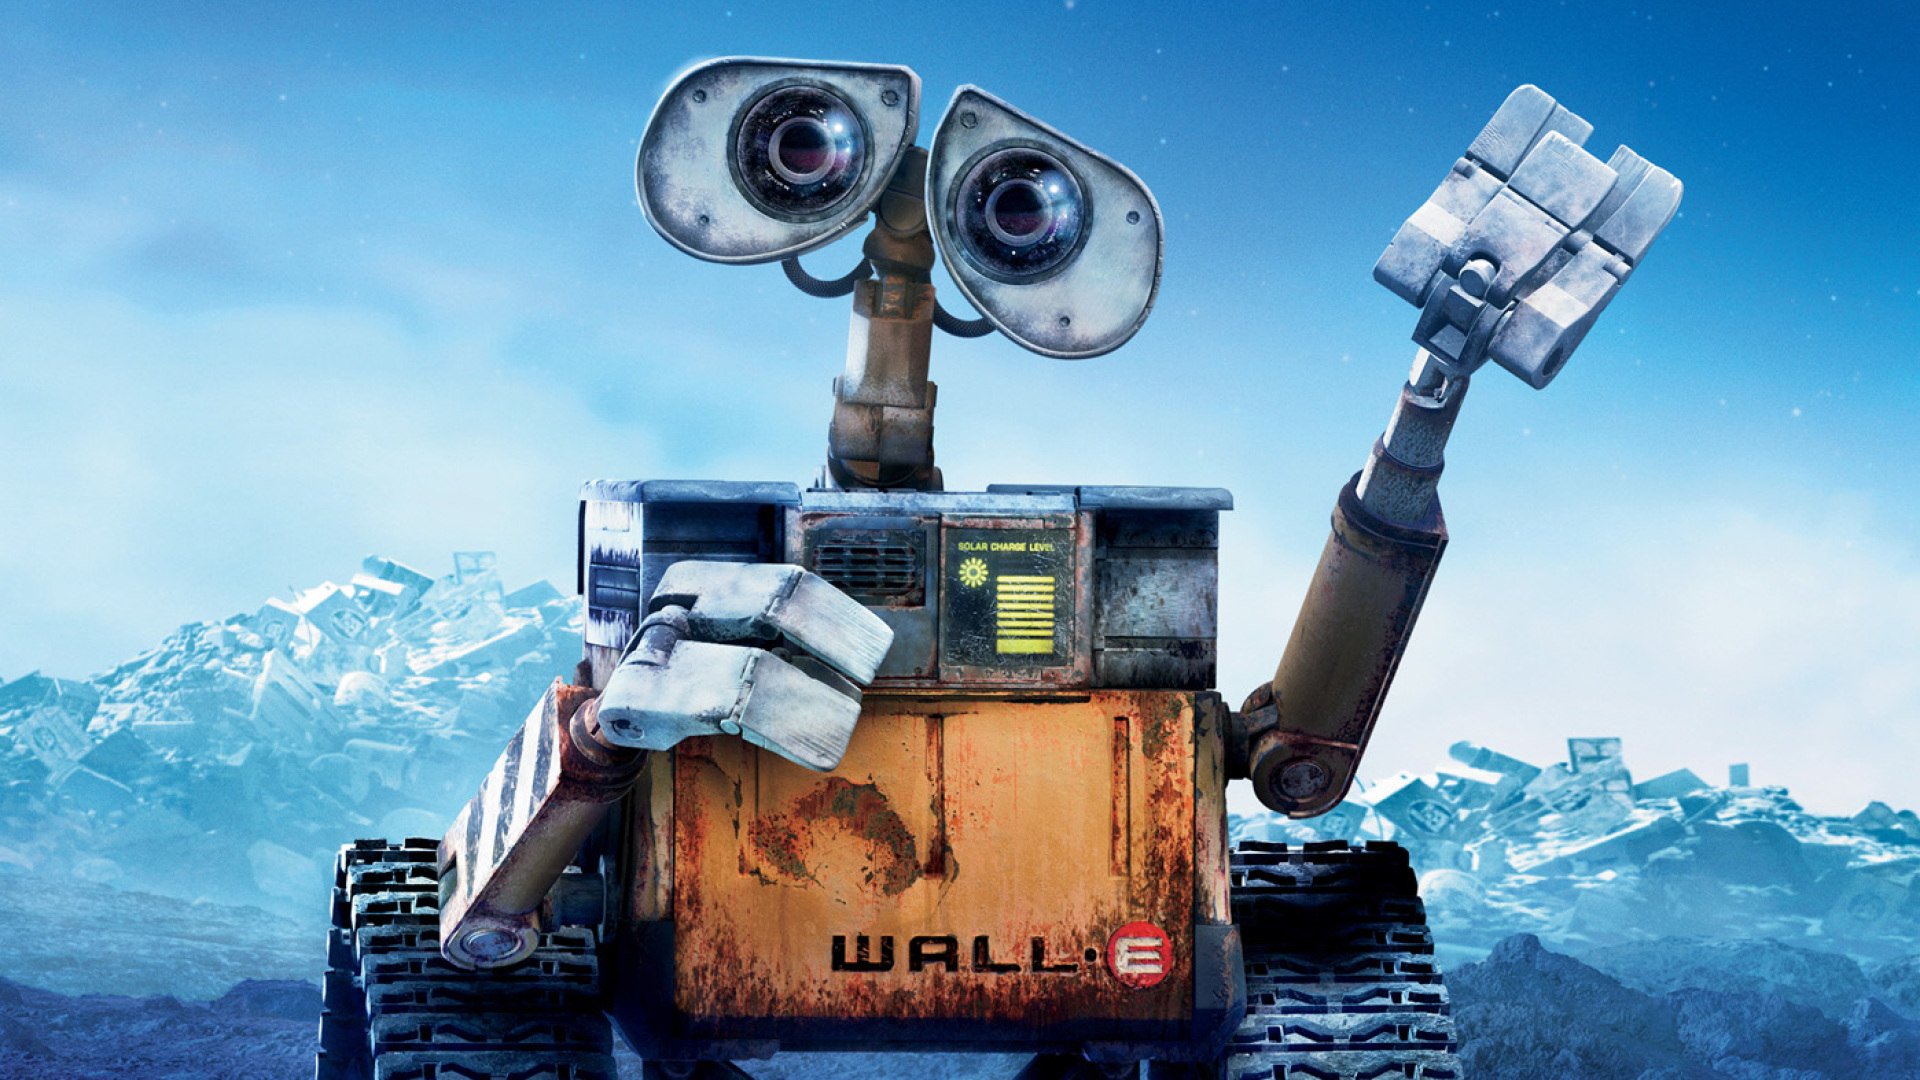 Watch WALL-E